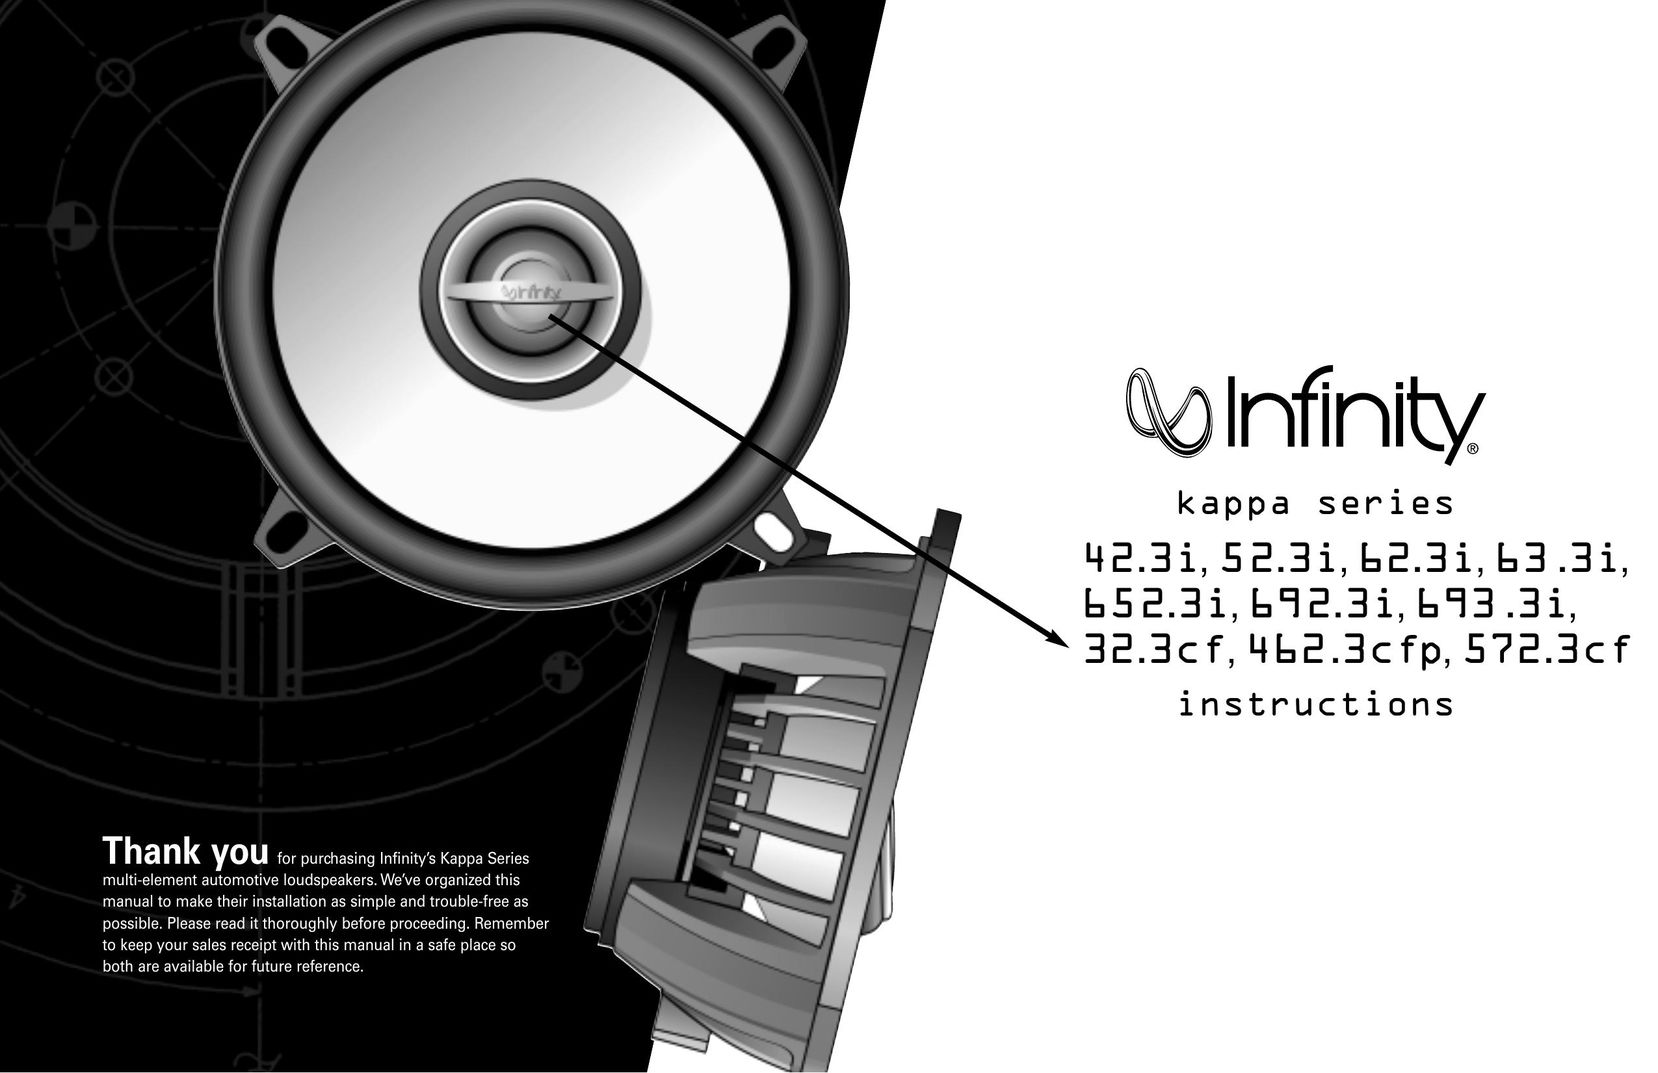 Infinity 63.3I Car Speaker User Manual